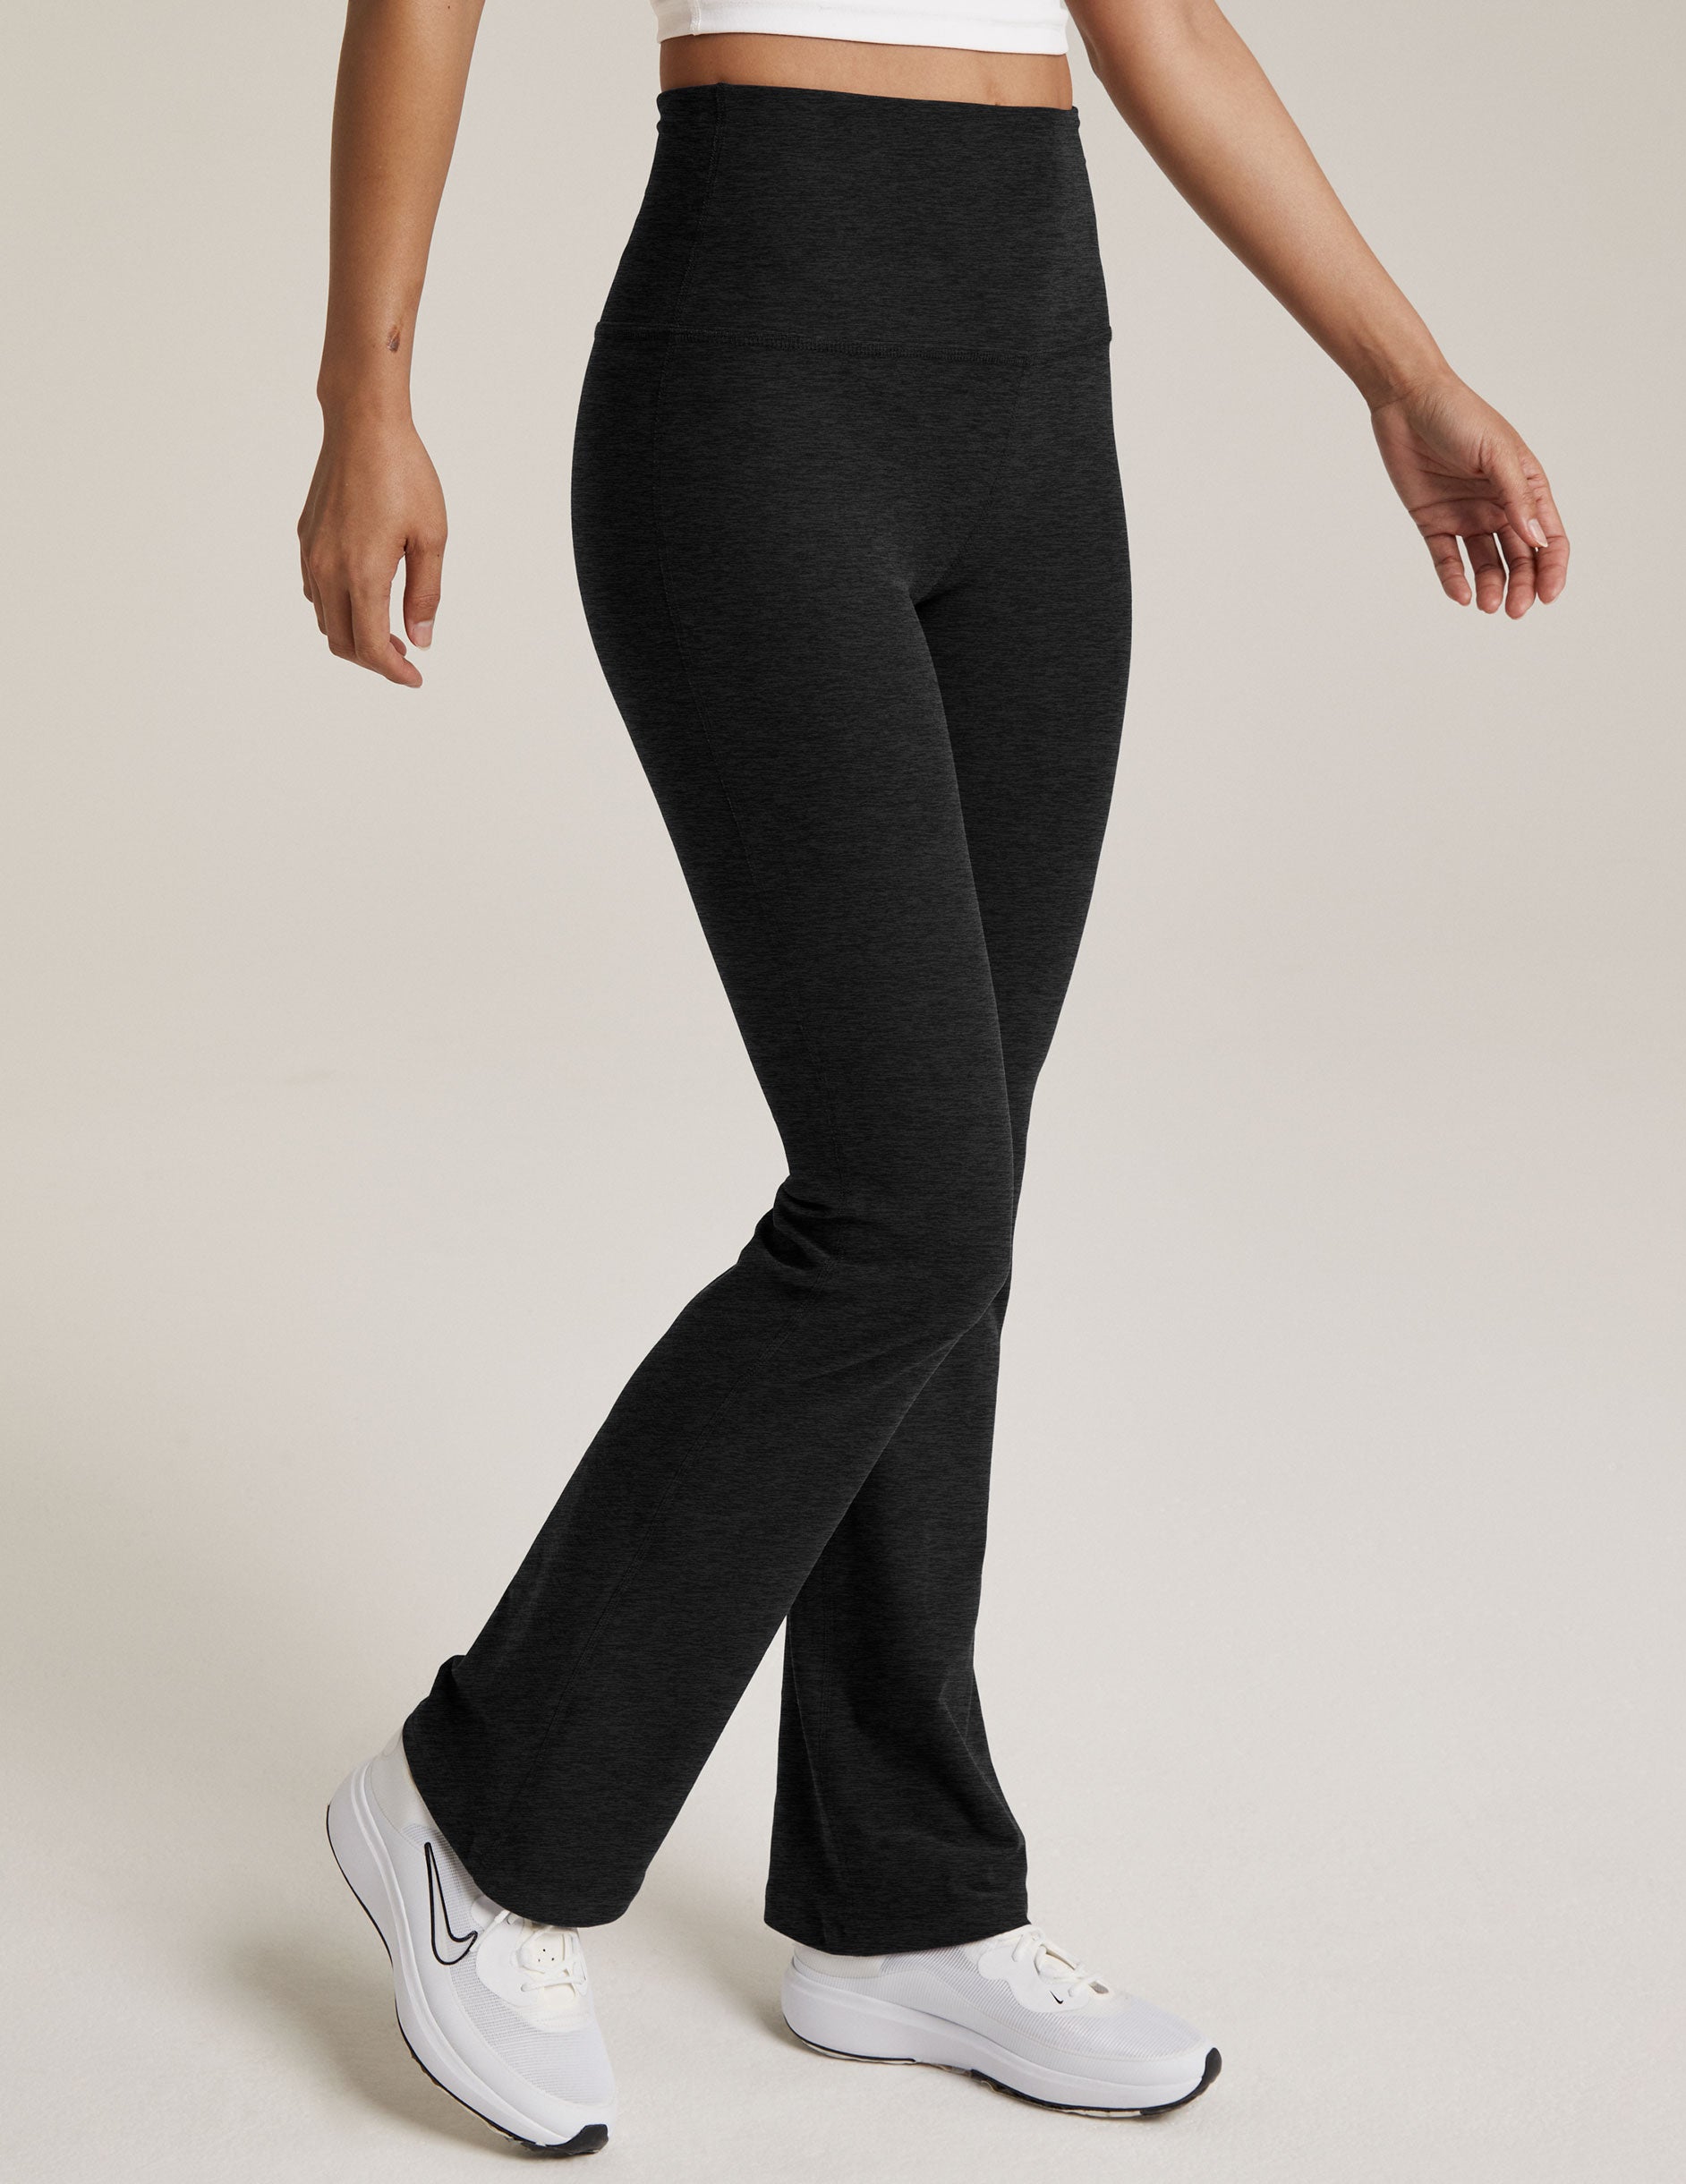  2 Back Pockets,Womens Bootcut Yoga Pants Flare Workout Pants,31,Black,Size  XXL